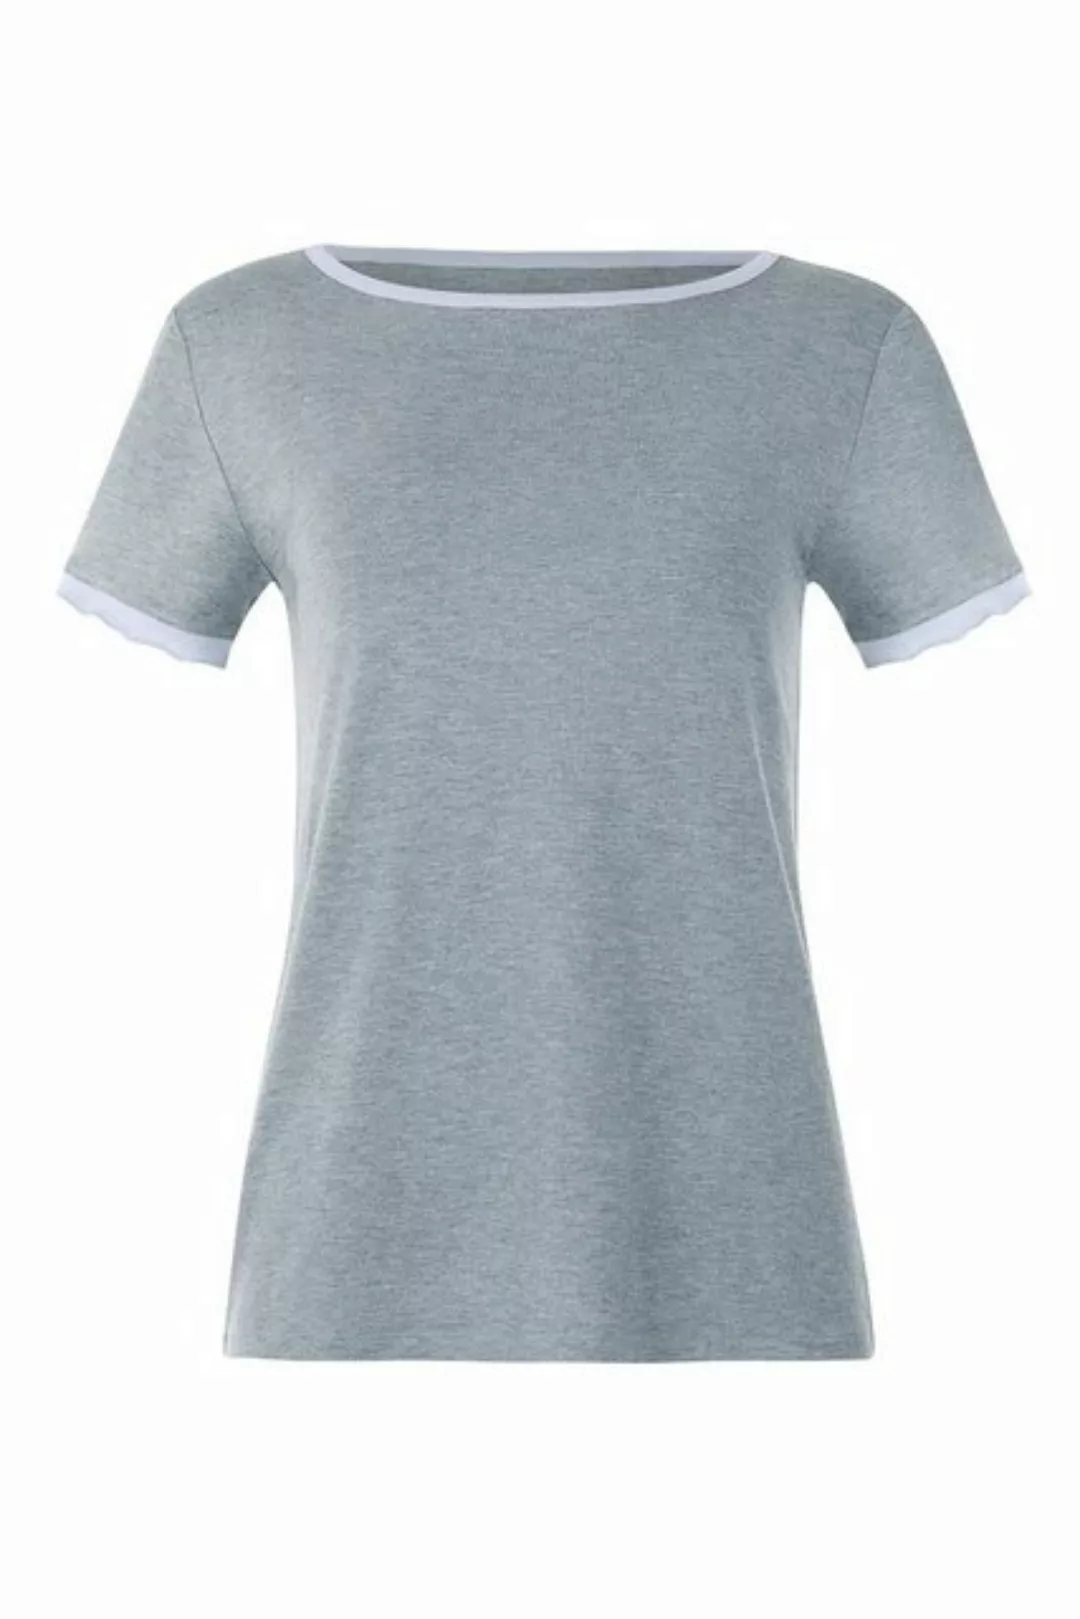 Lisca Shirt kurzarm Laura 38 grau günstig online kaufen